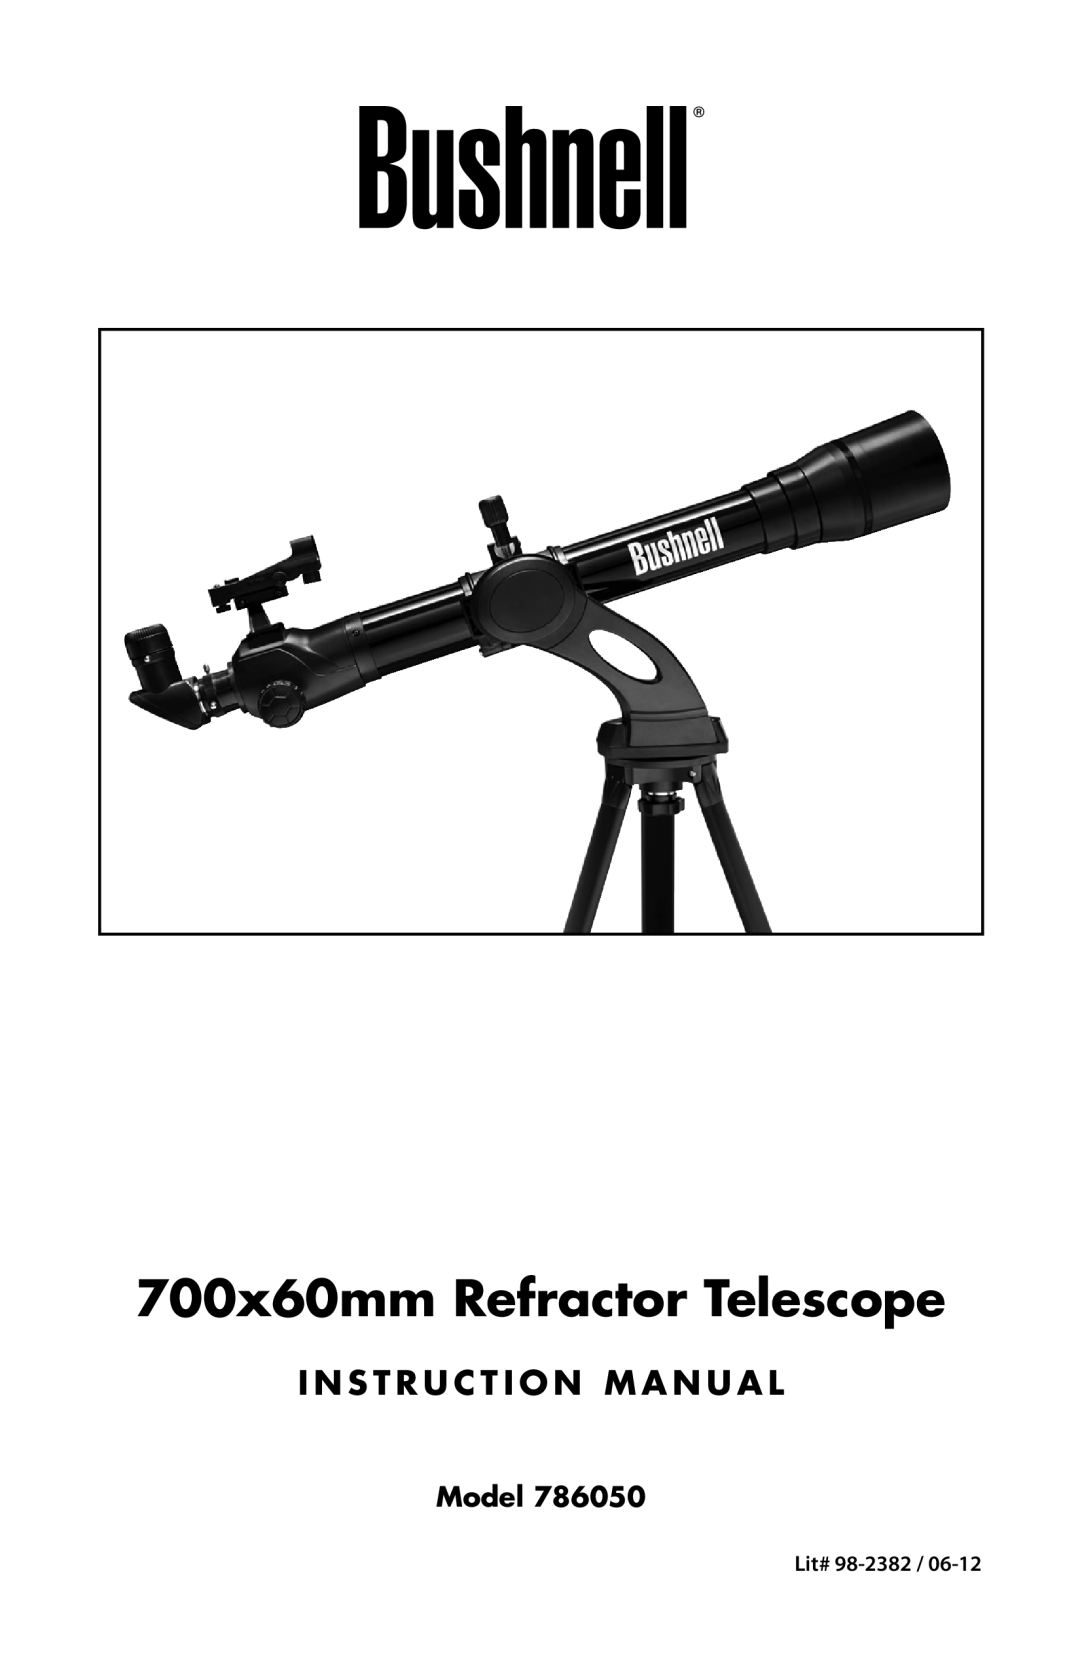 Bushnell 786050 instruction manual Model, 700x60mm Refractor Telescope, I N S T R U C T I O N M A N U A L, Lit# 98-2382 